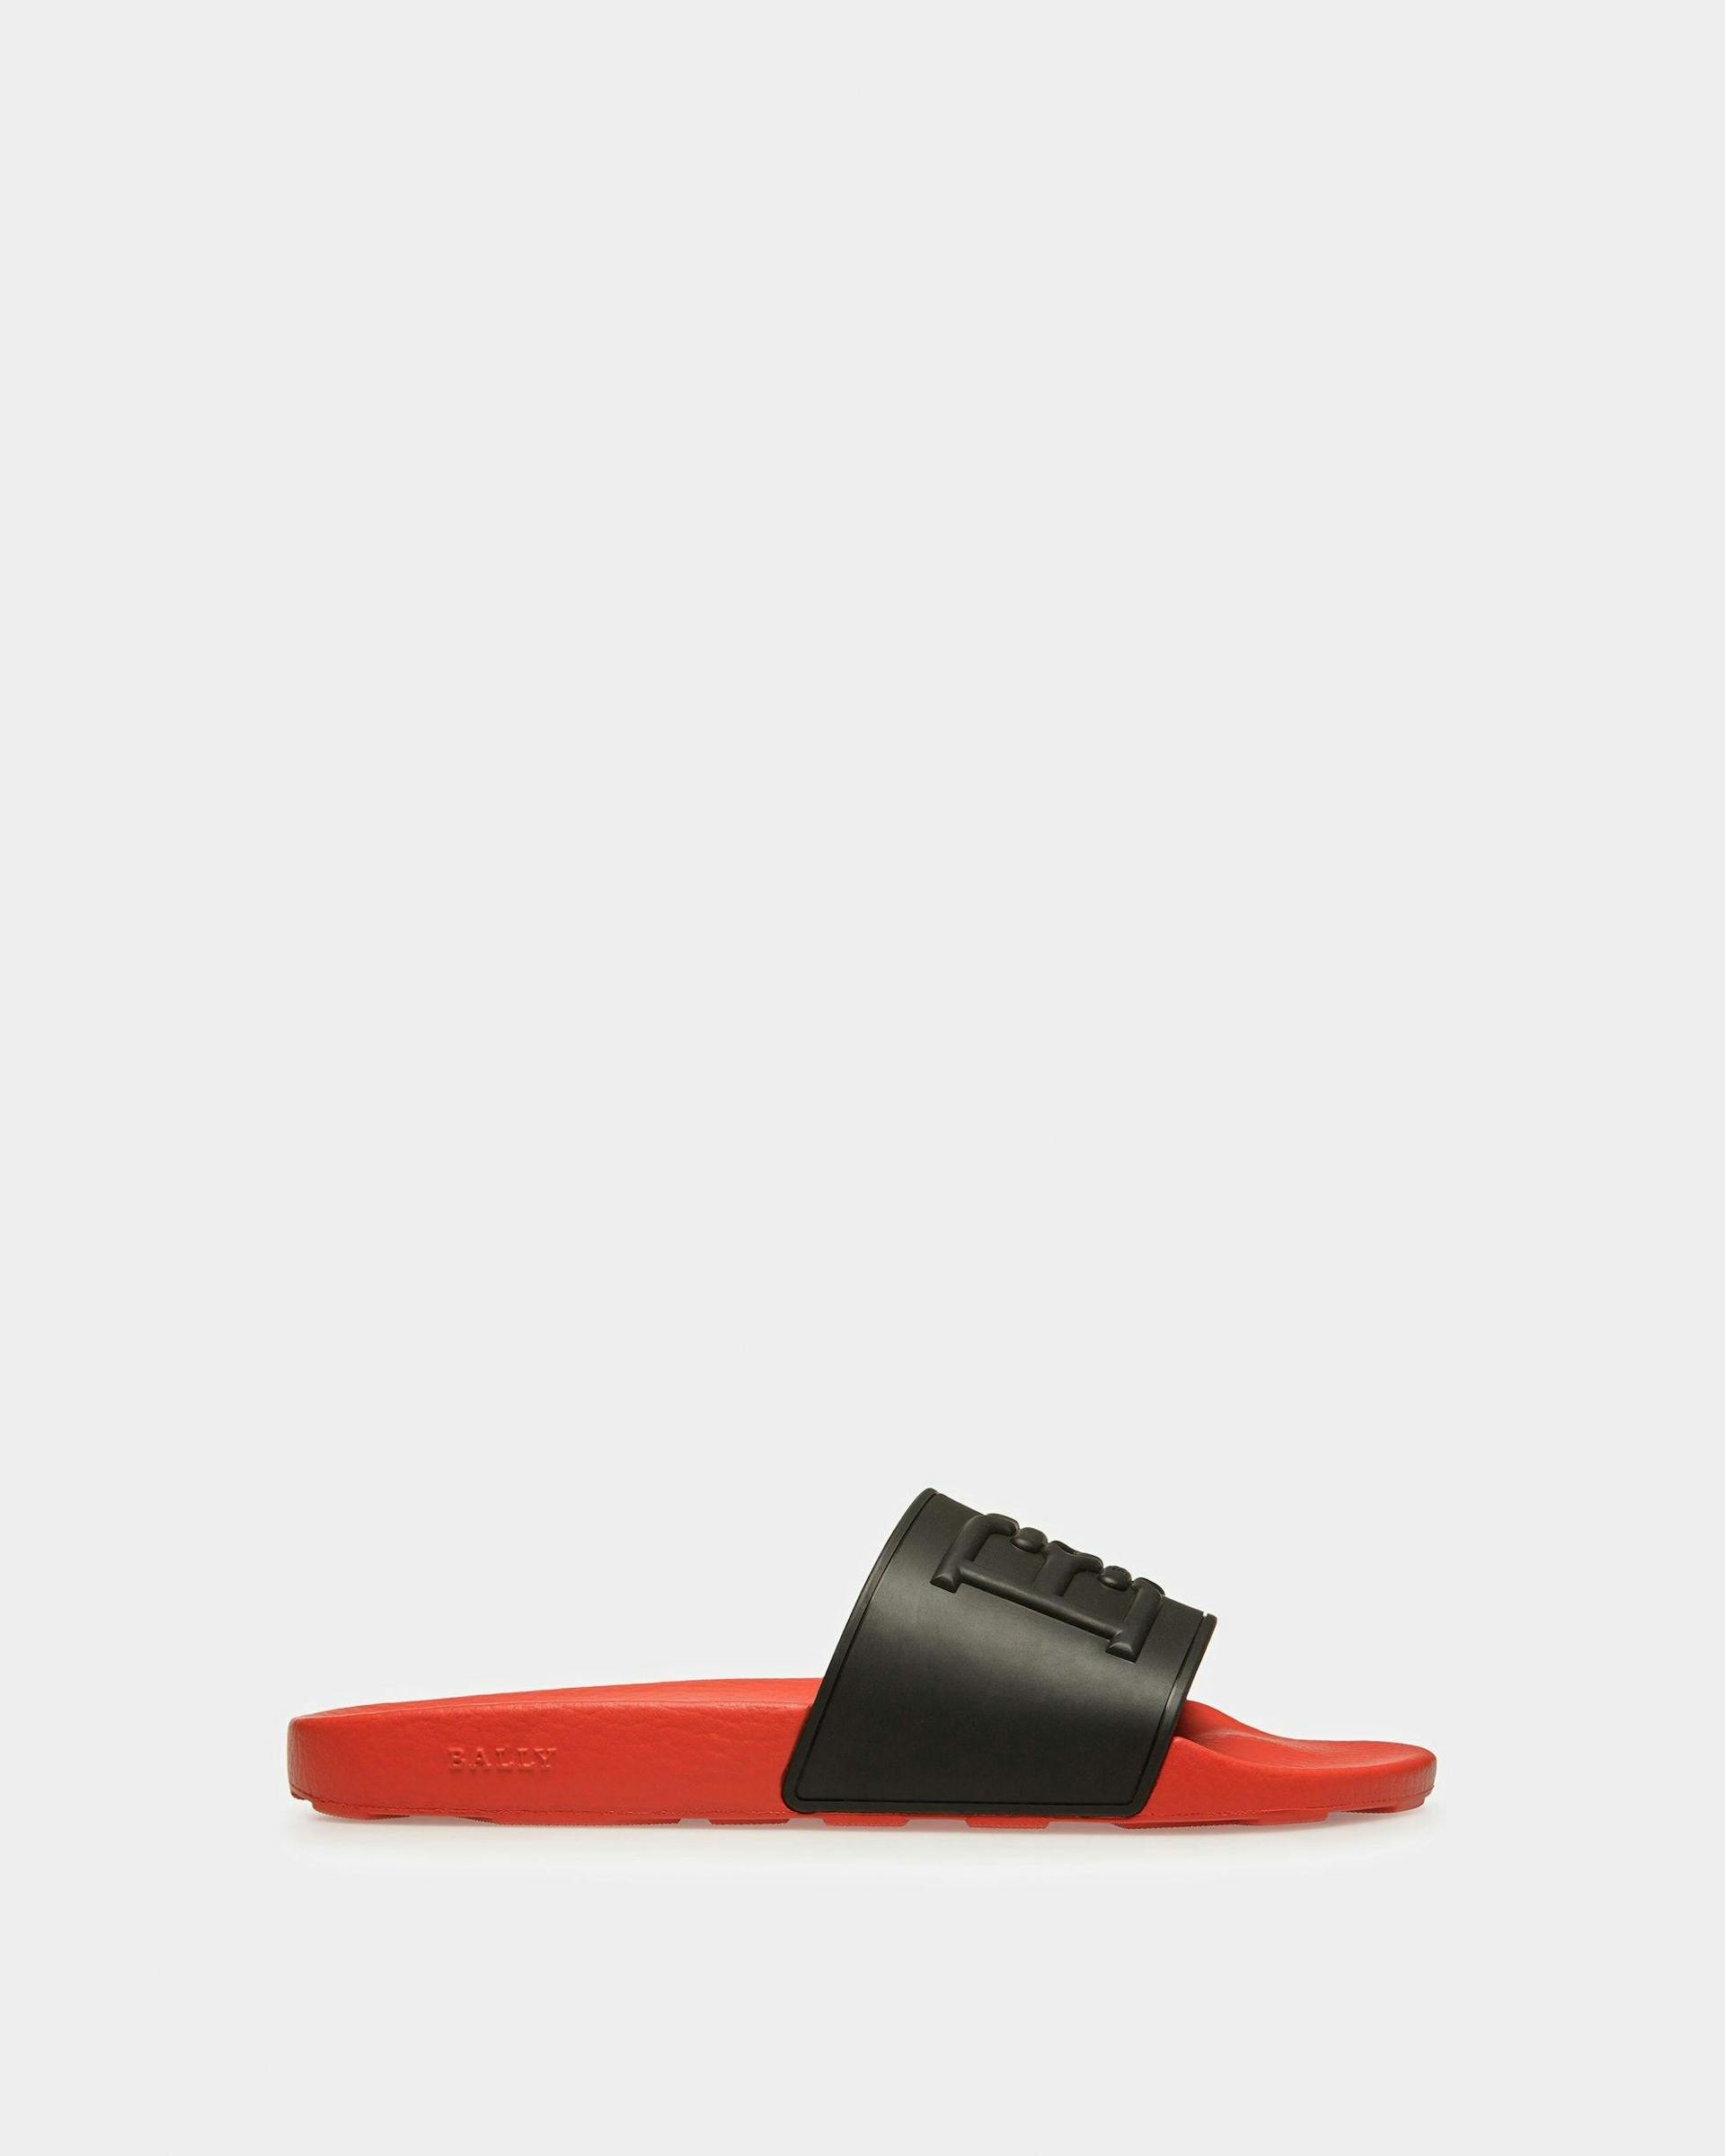 Scotty Rubber Sandals In Black And Orange - Men's - Bally - 01